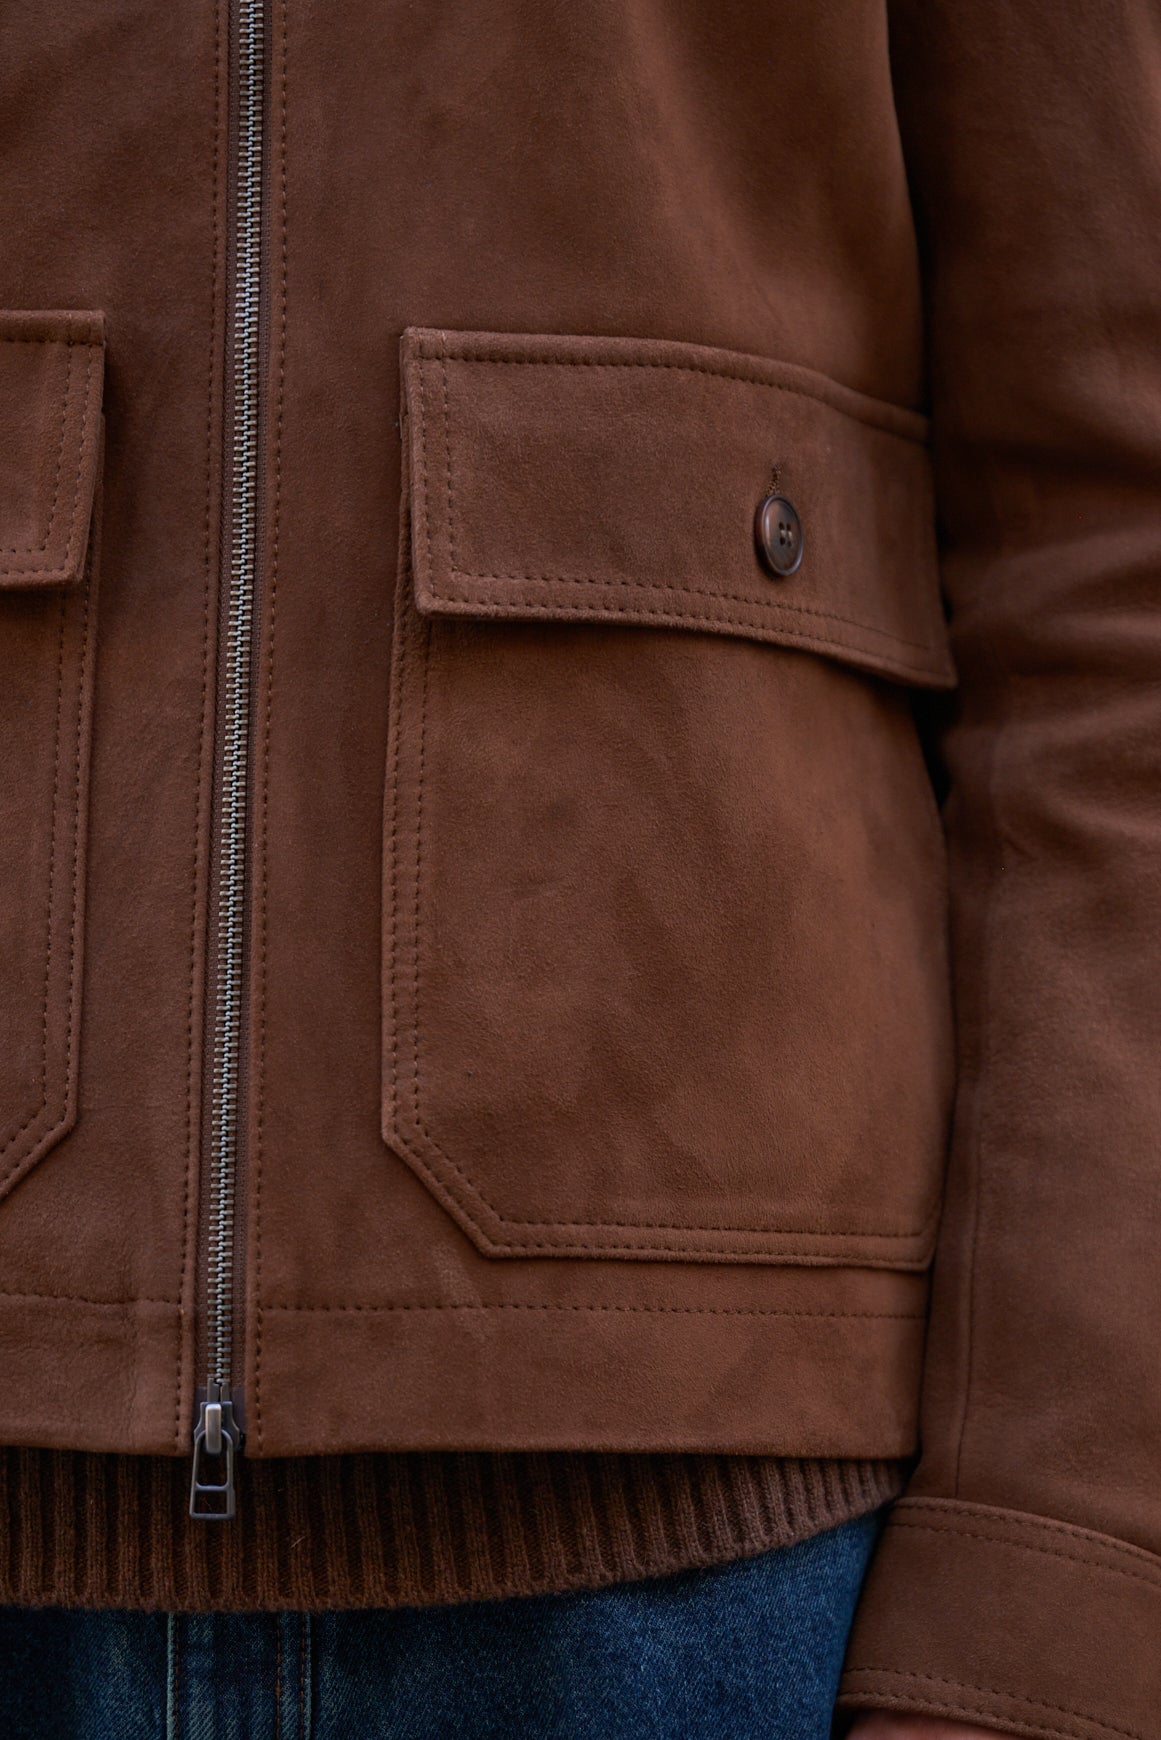 EDMONT Leather Jacket - Cigar